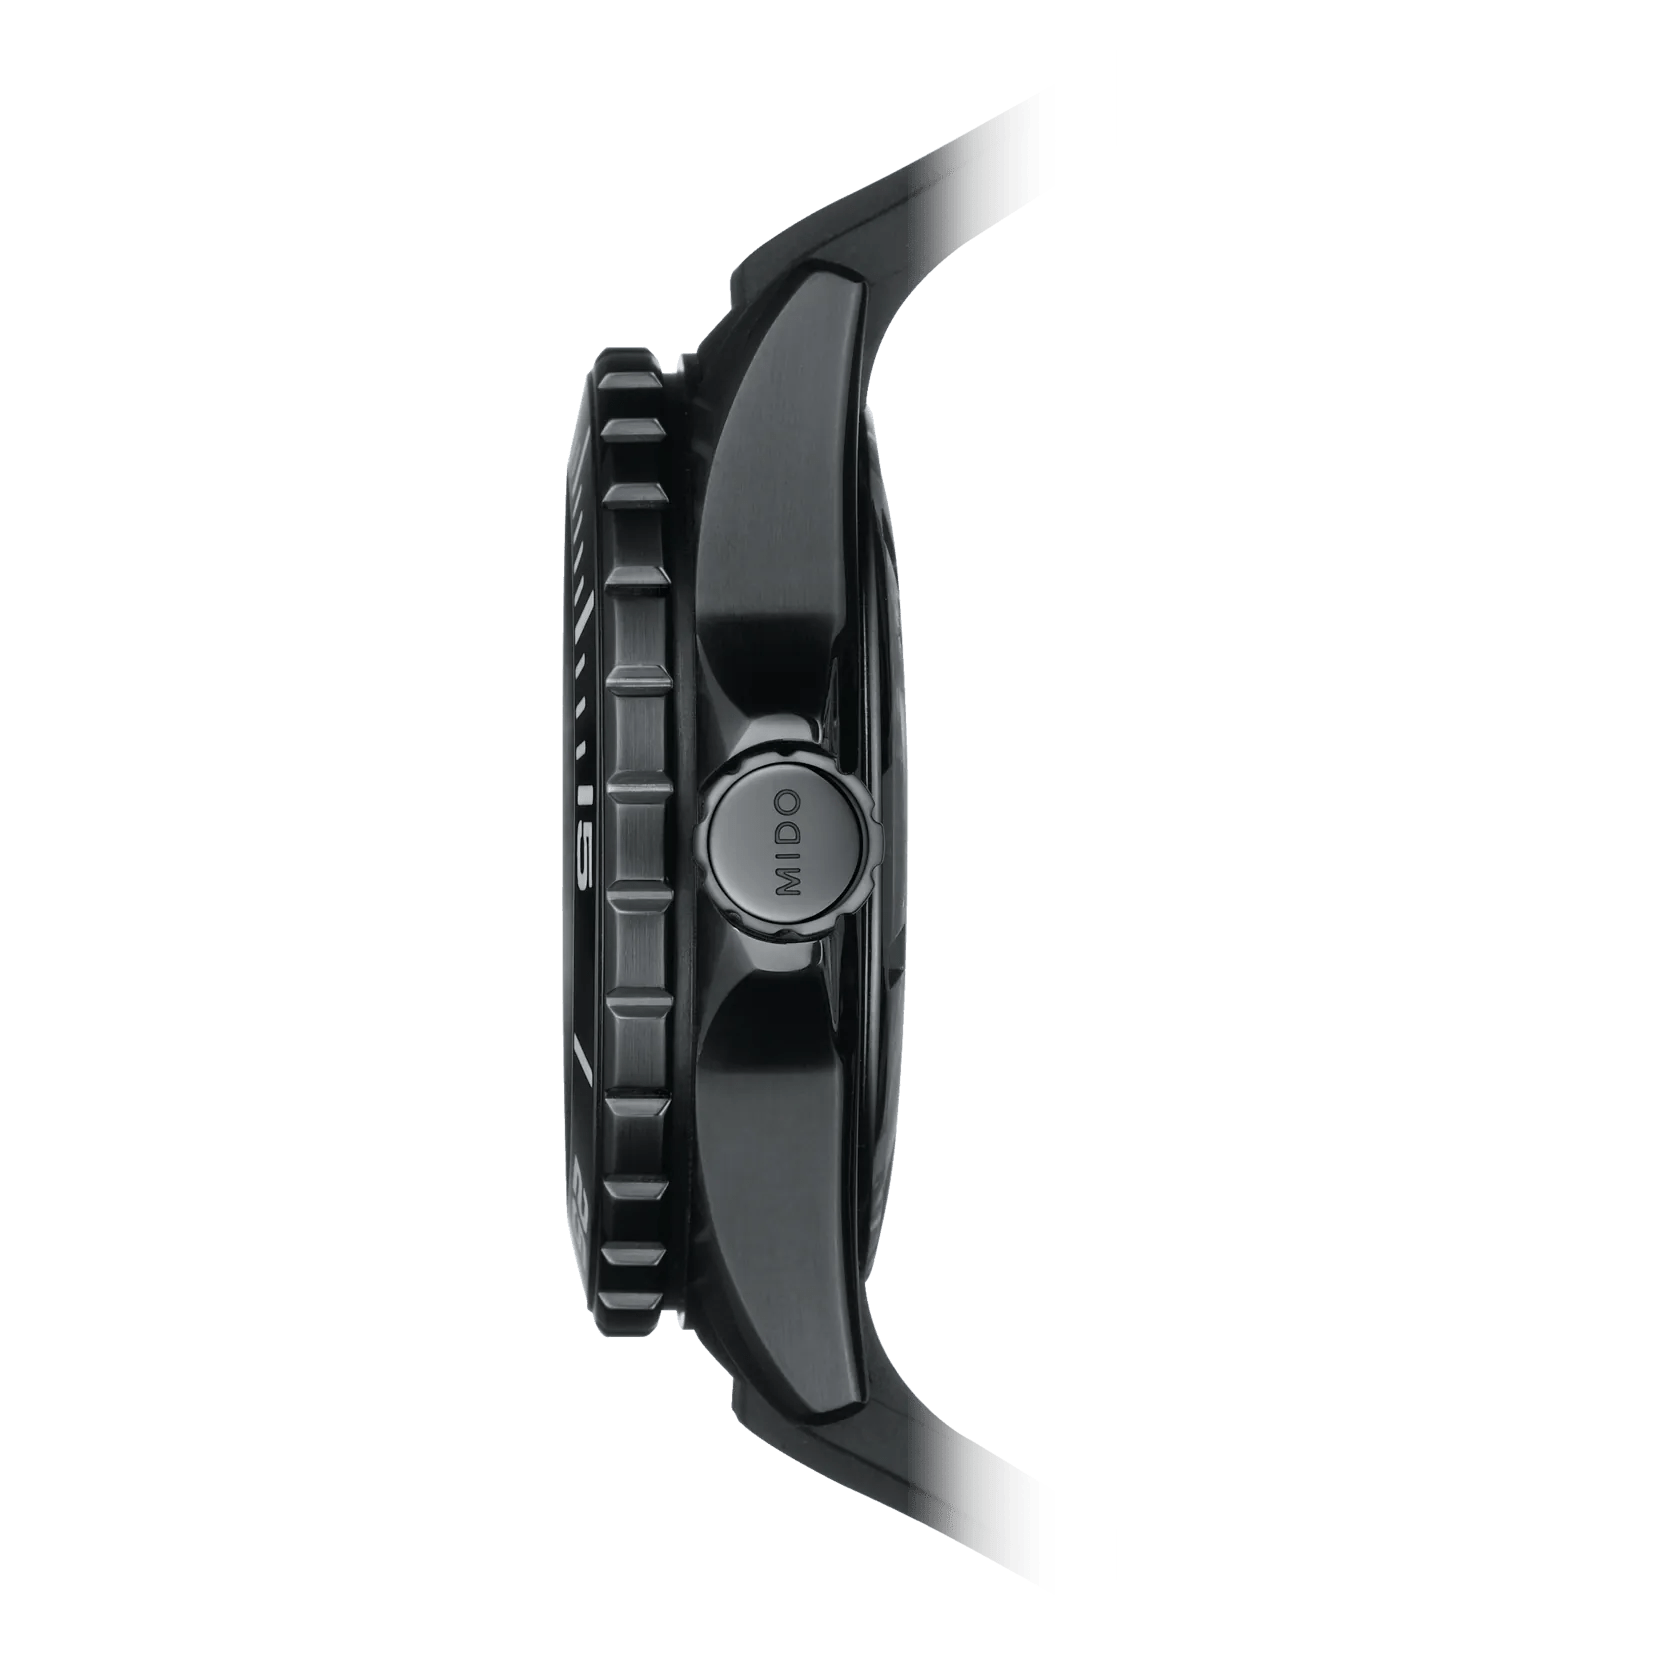 Mido Ocean Star Diver 600 COSC Chronometer Black Men's Watch M0266083705100